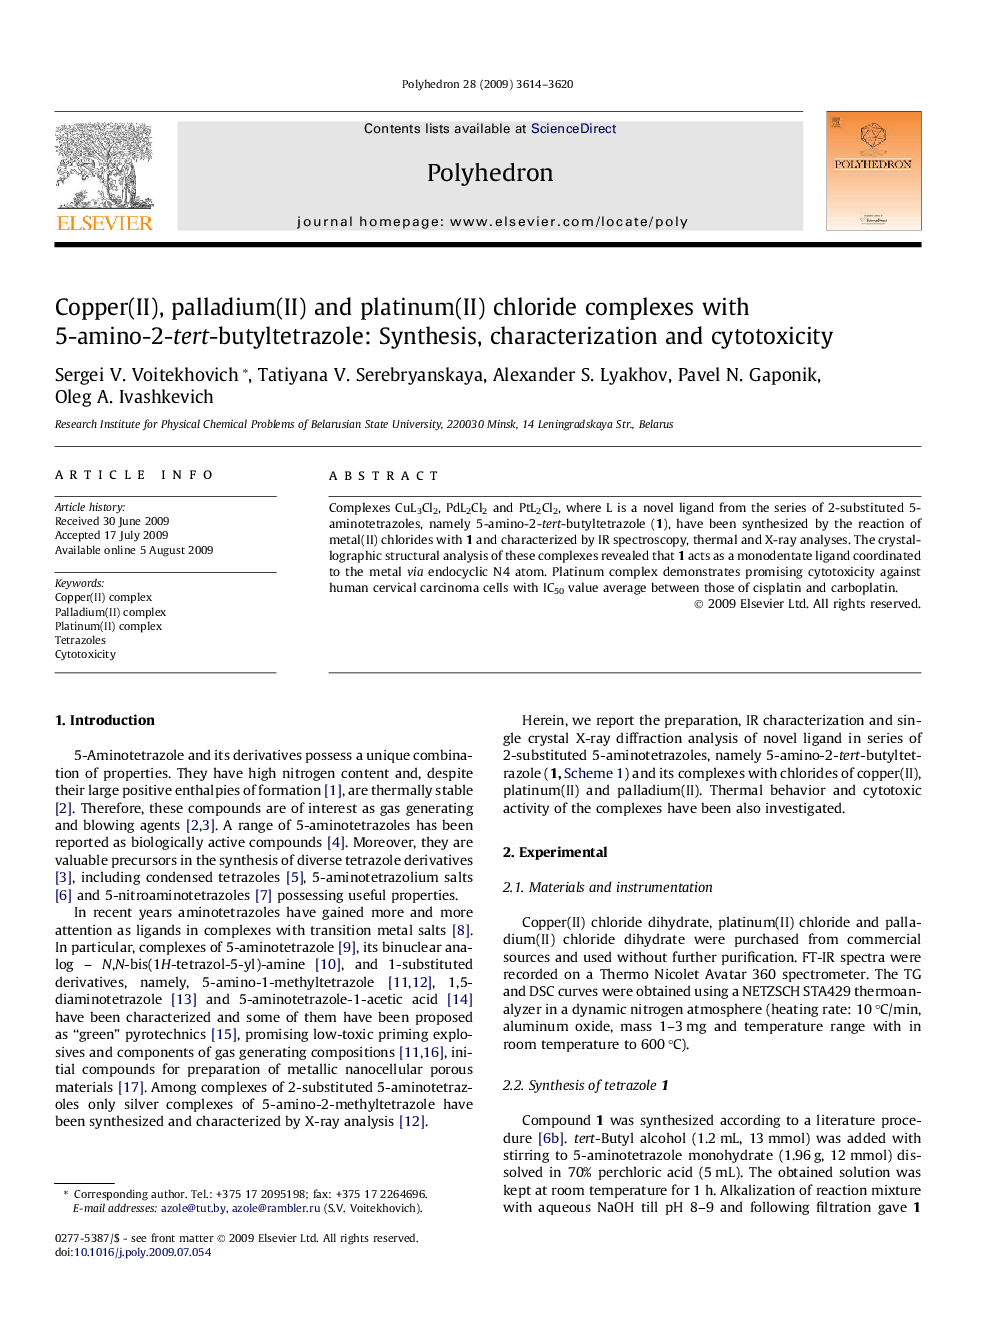 Copper(II), palladium(II) and platinum(II) chloride complexes with 5-amino-2-tert-butyltetrazole: Synthesis, characterization and cytotoxicity